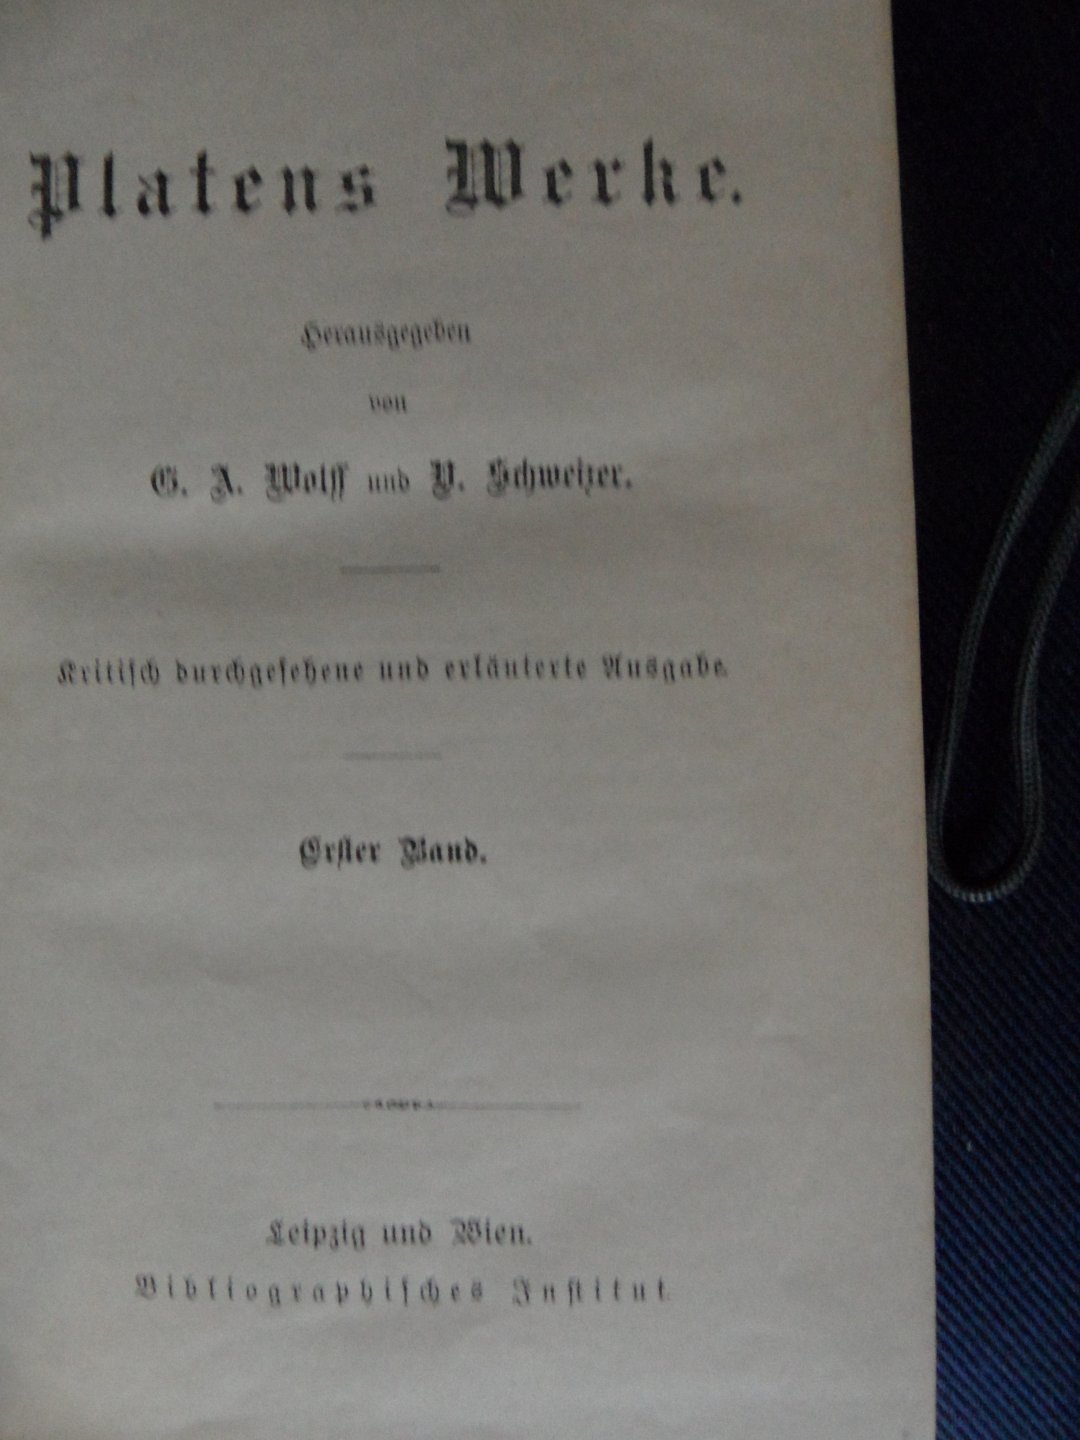 Wolff, G.A., Schweizer, V. - Platens Werke, erster Band